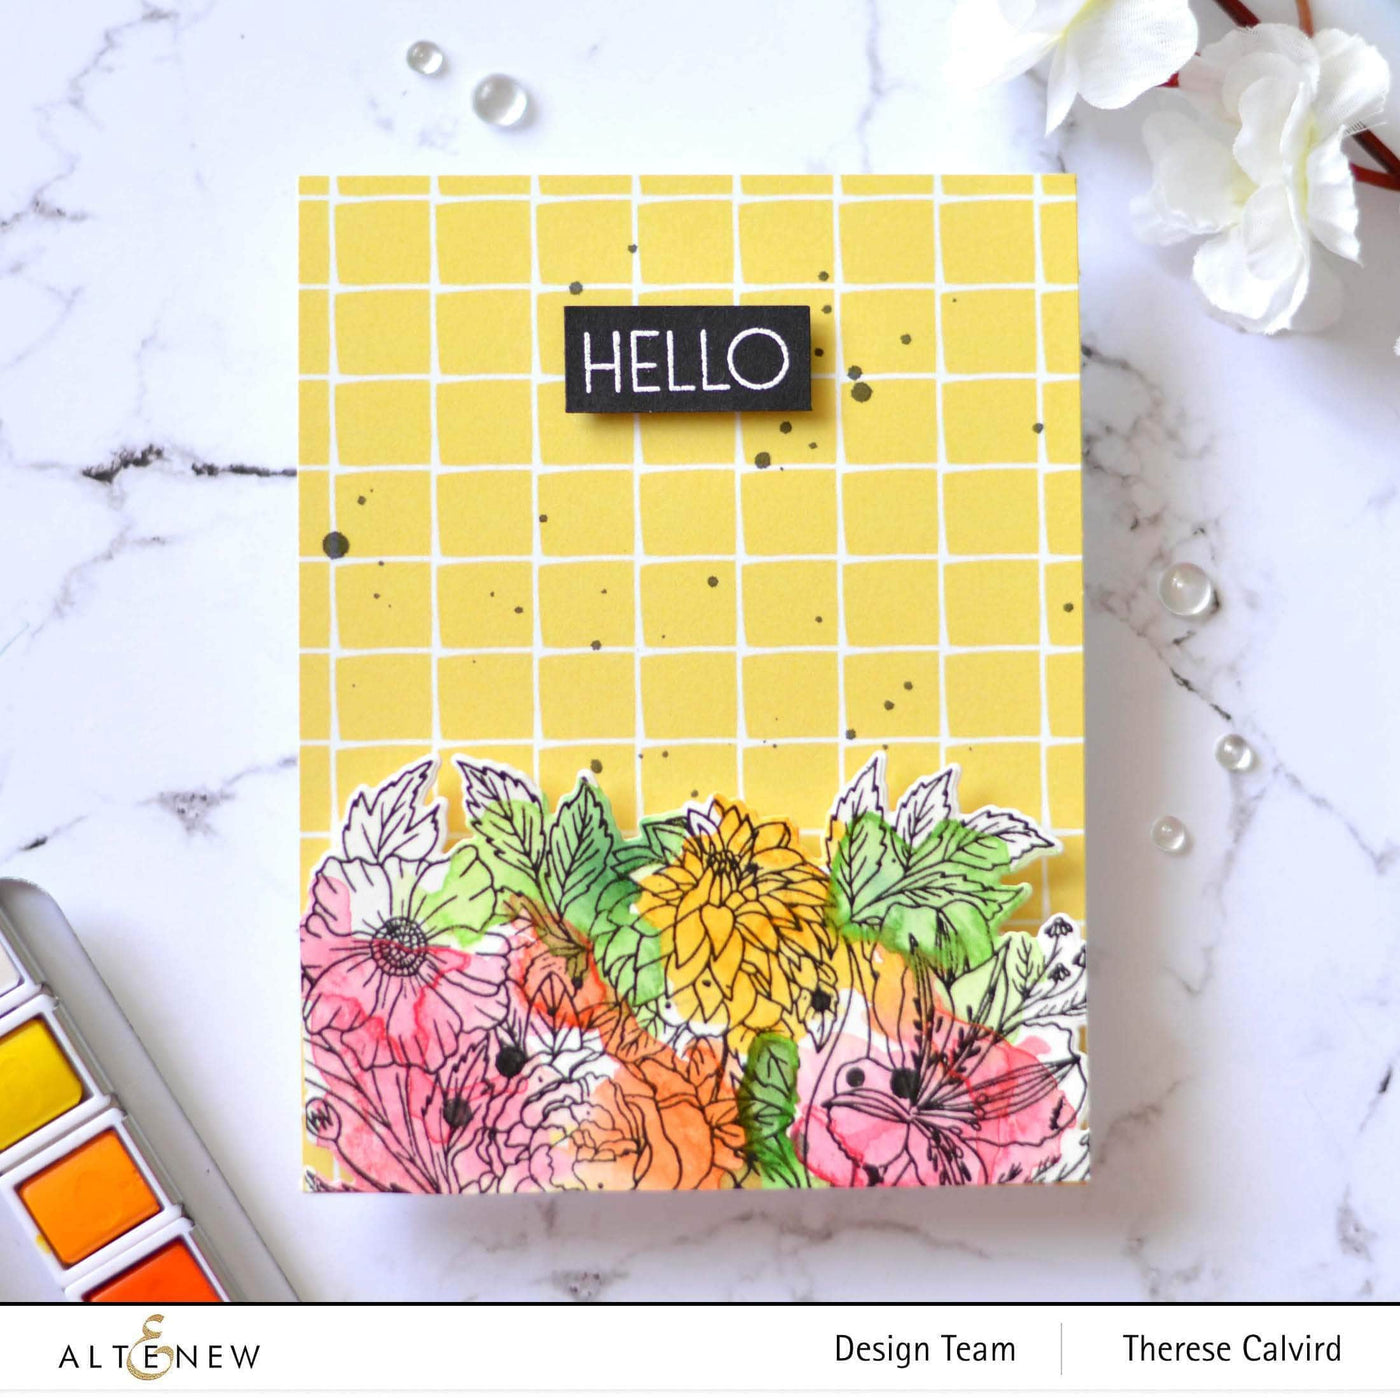 Altenew Creativity Kit Bundle Geometric Watercolor Creativity Cardmaking Kit